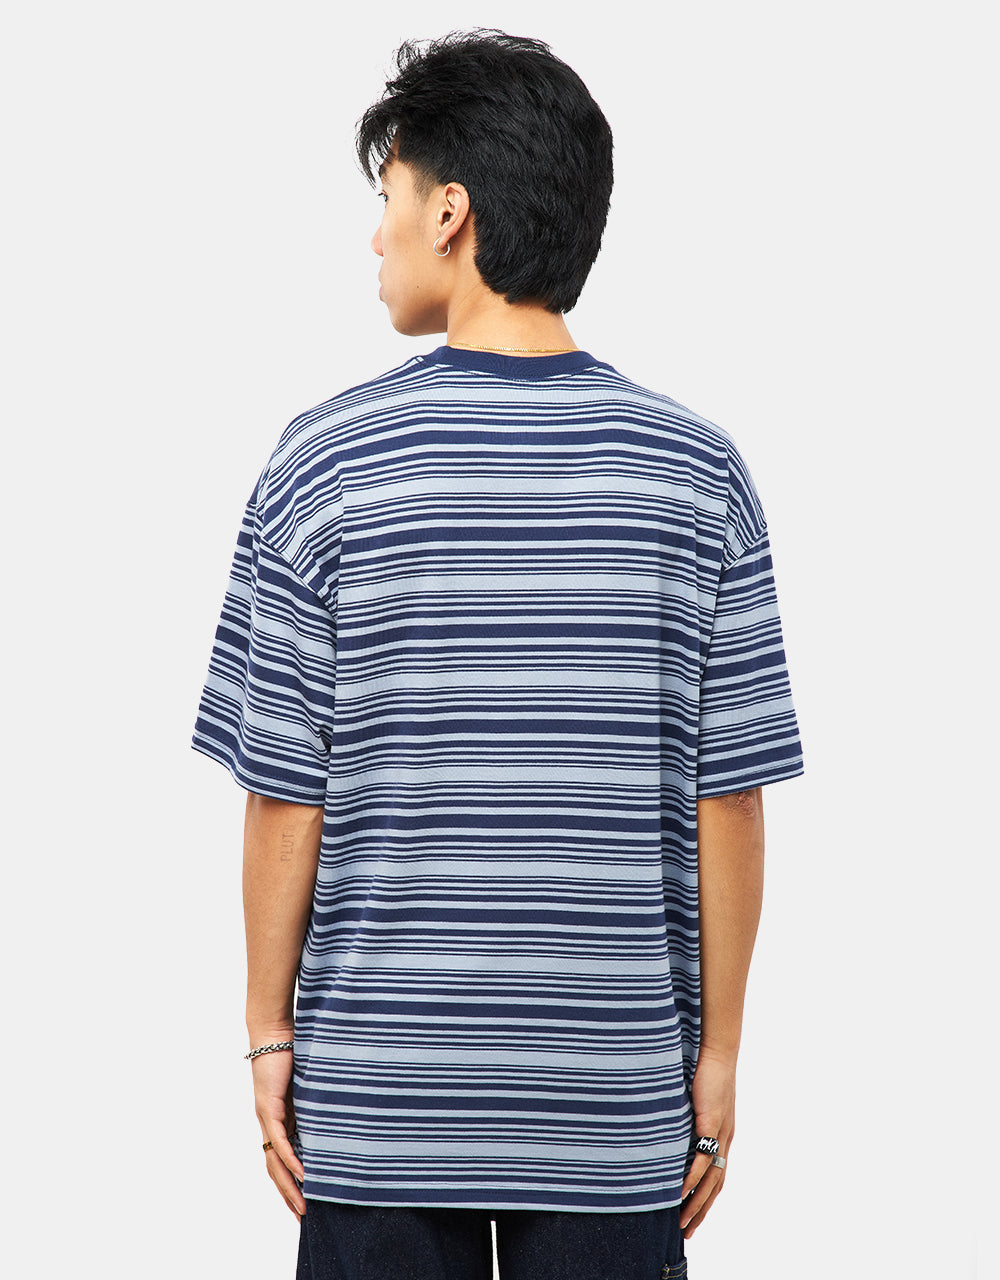 Nike SB Striped T-Shirt - Ashen Slate